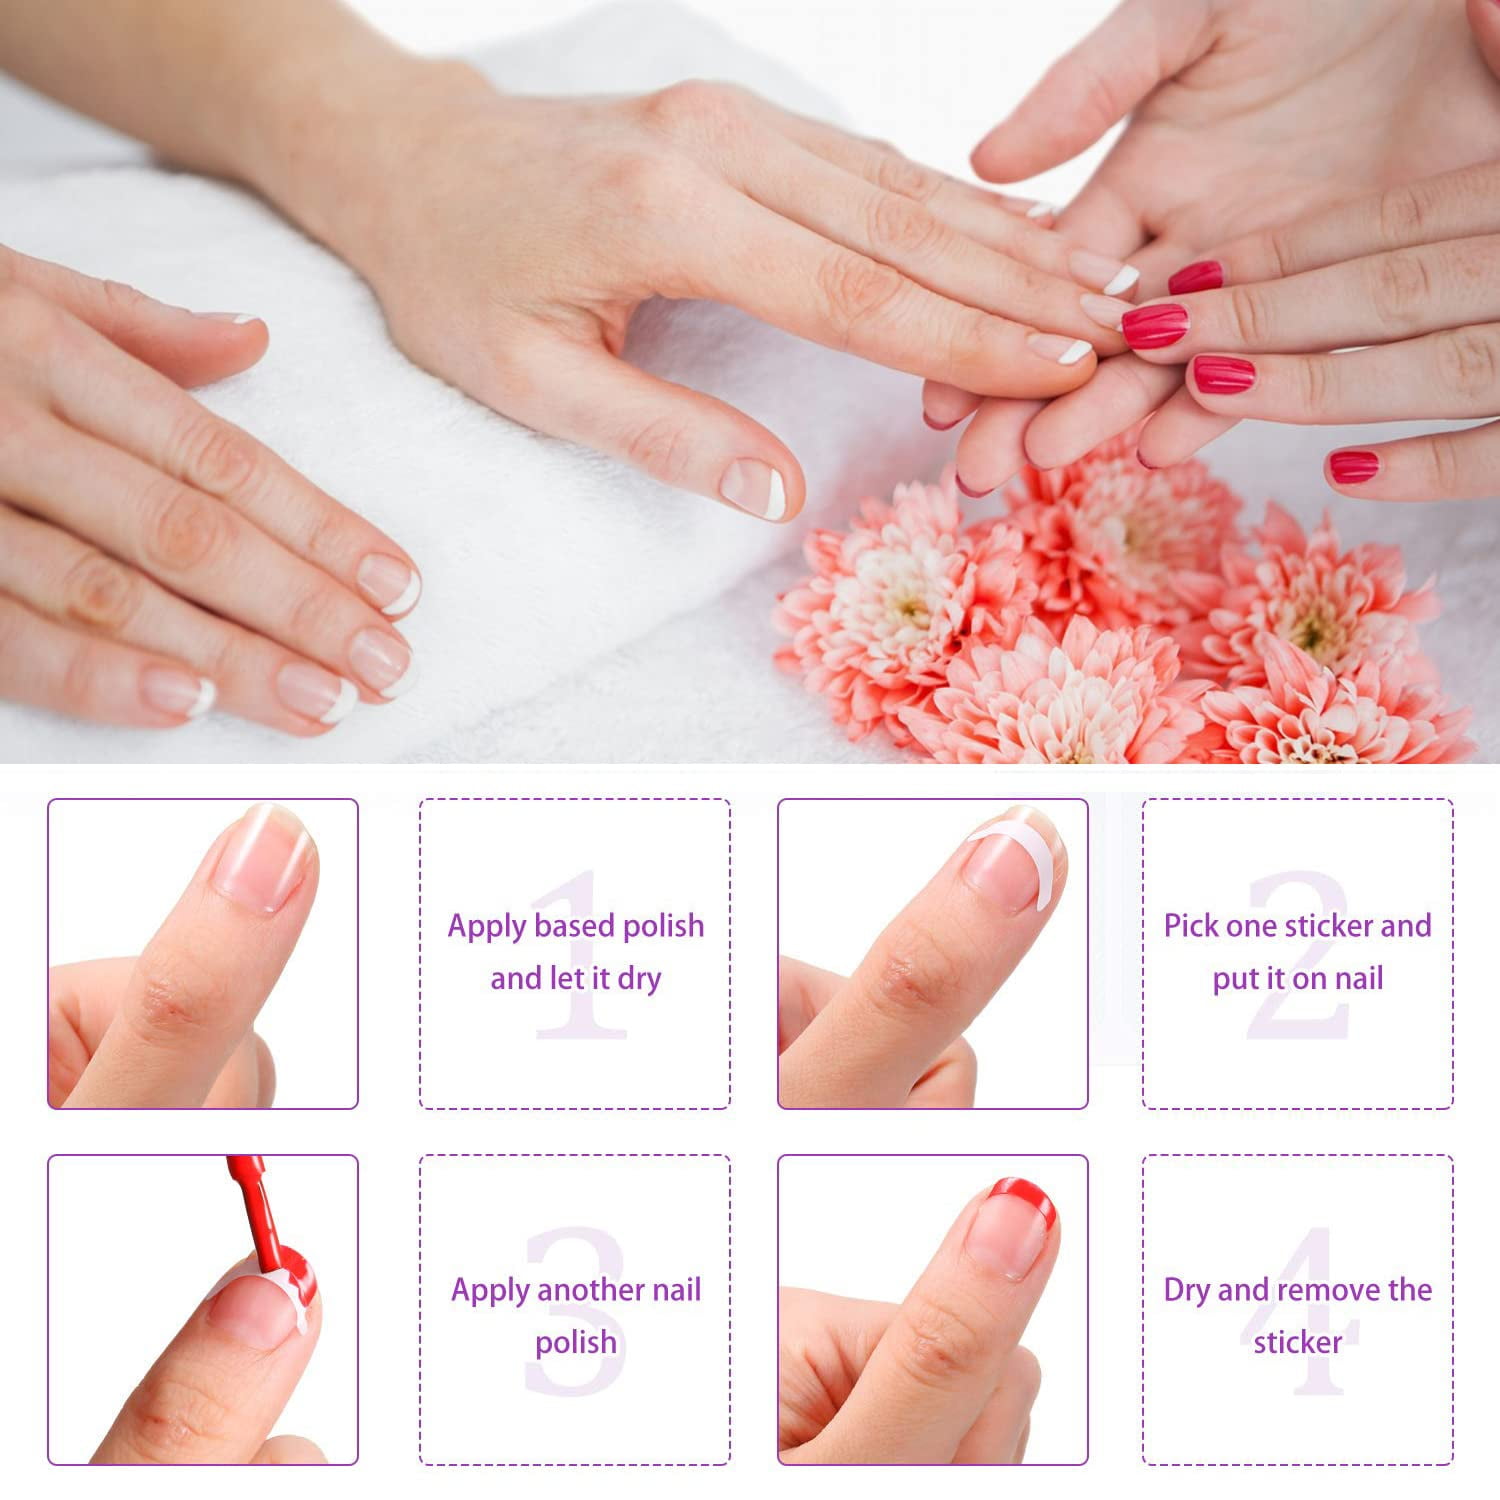 Manicure in 10 steps | Palace Salon Nails & Spa